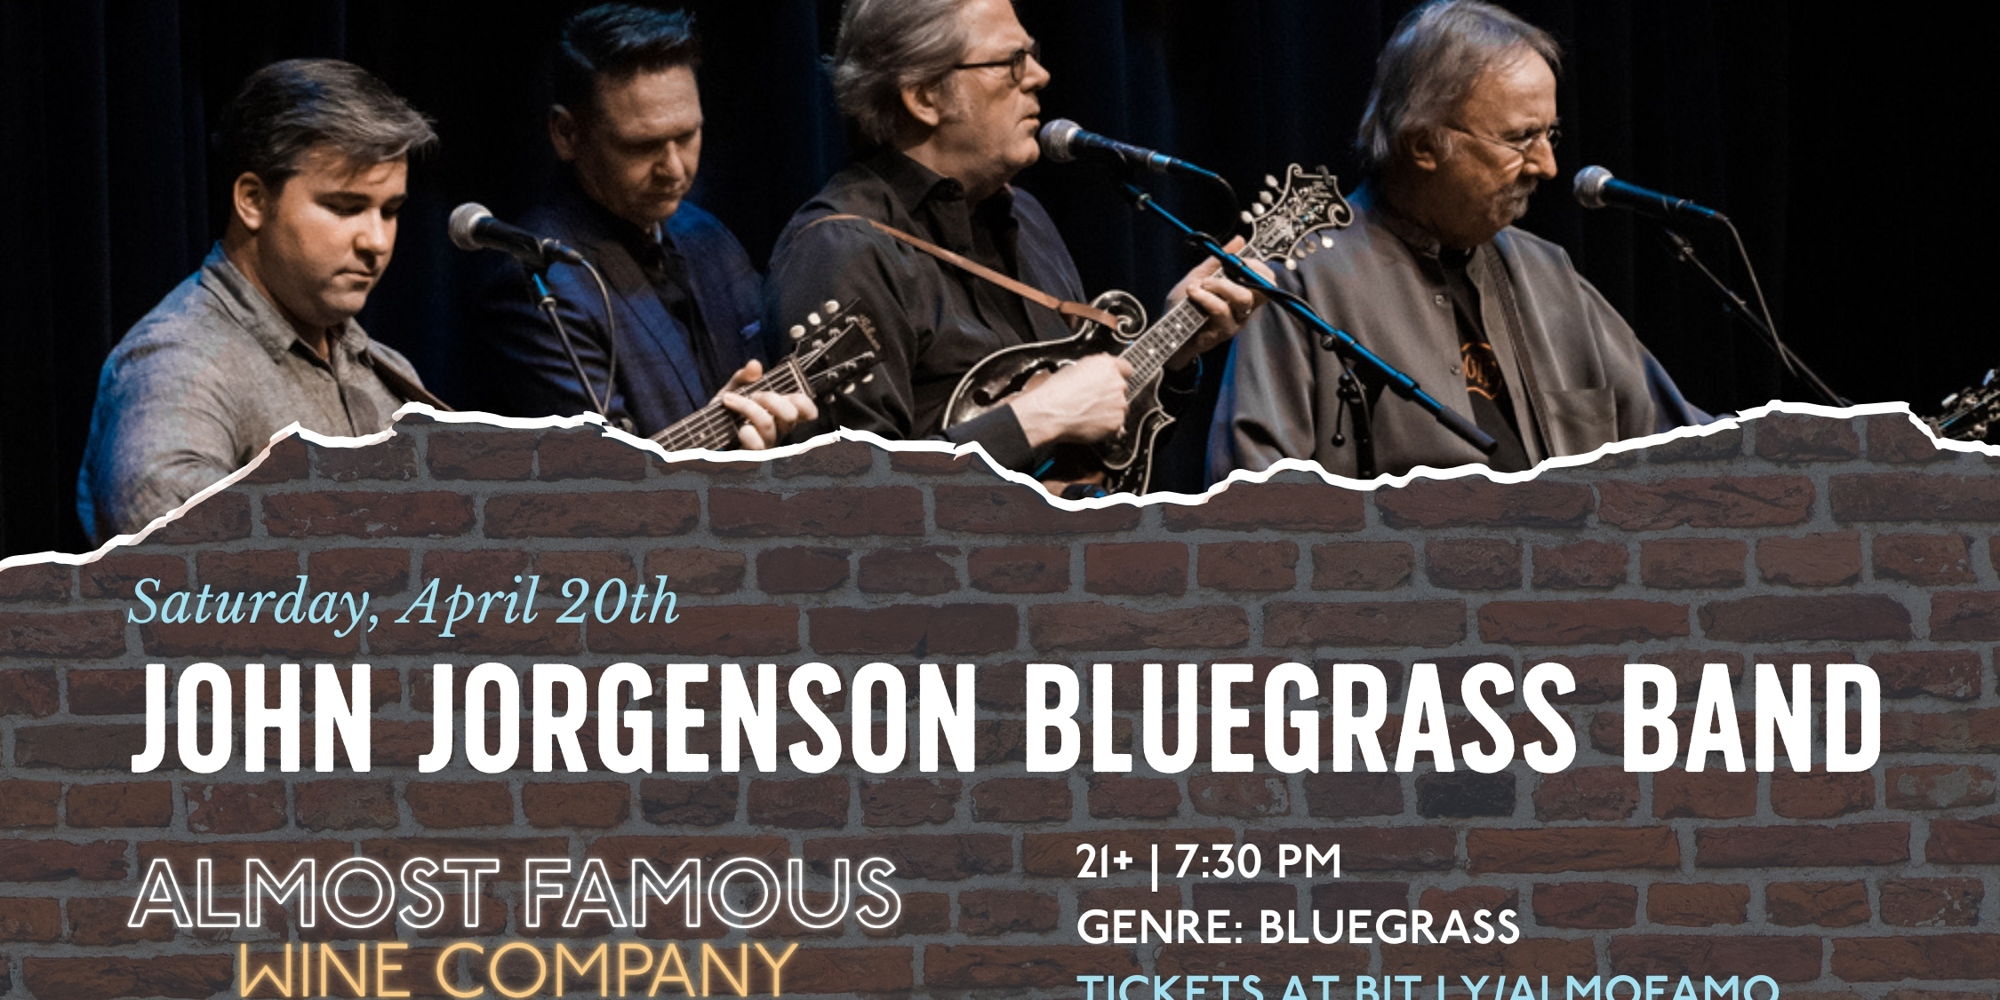 John Jorgenson Bluegrass Band: Grammy winner's supergroup with ties to Emmylou Harris, Bonnie Rait, Dolly Parton promotional image